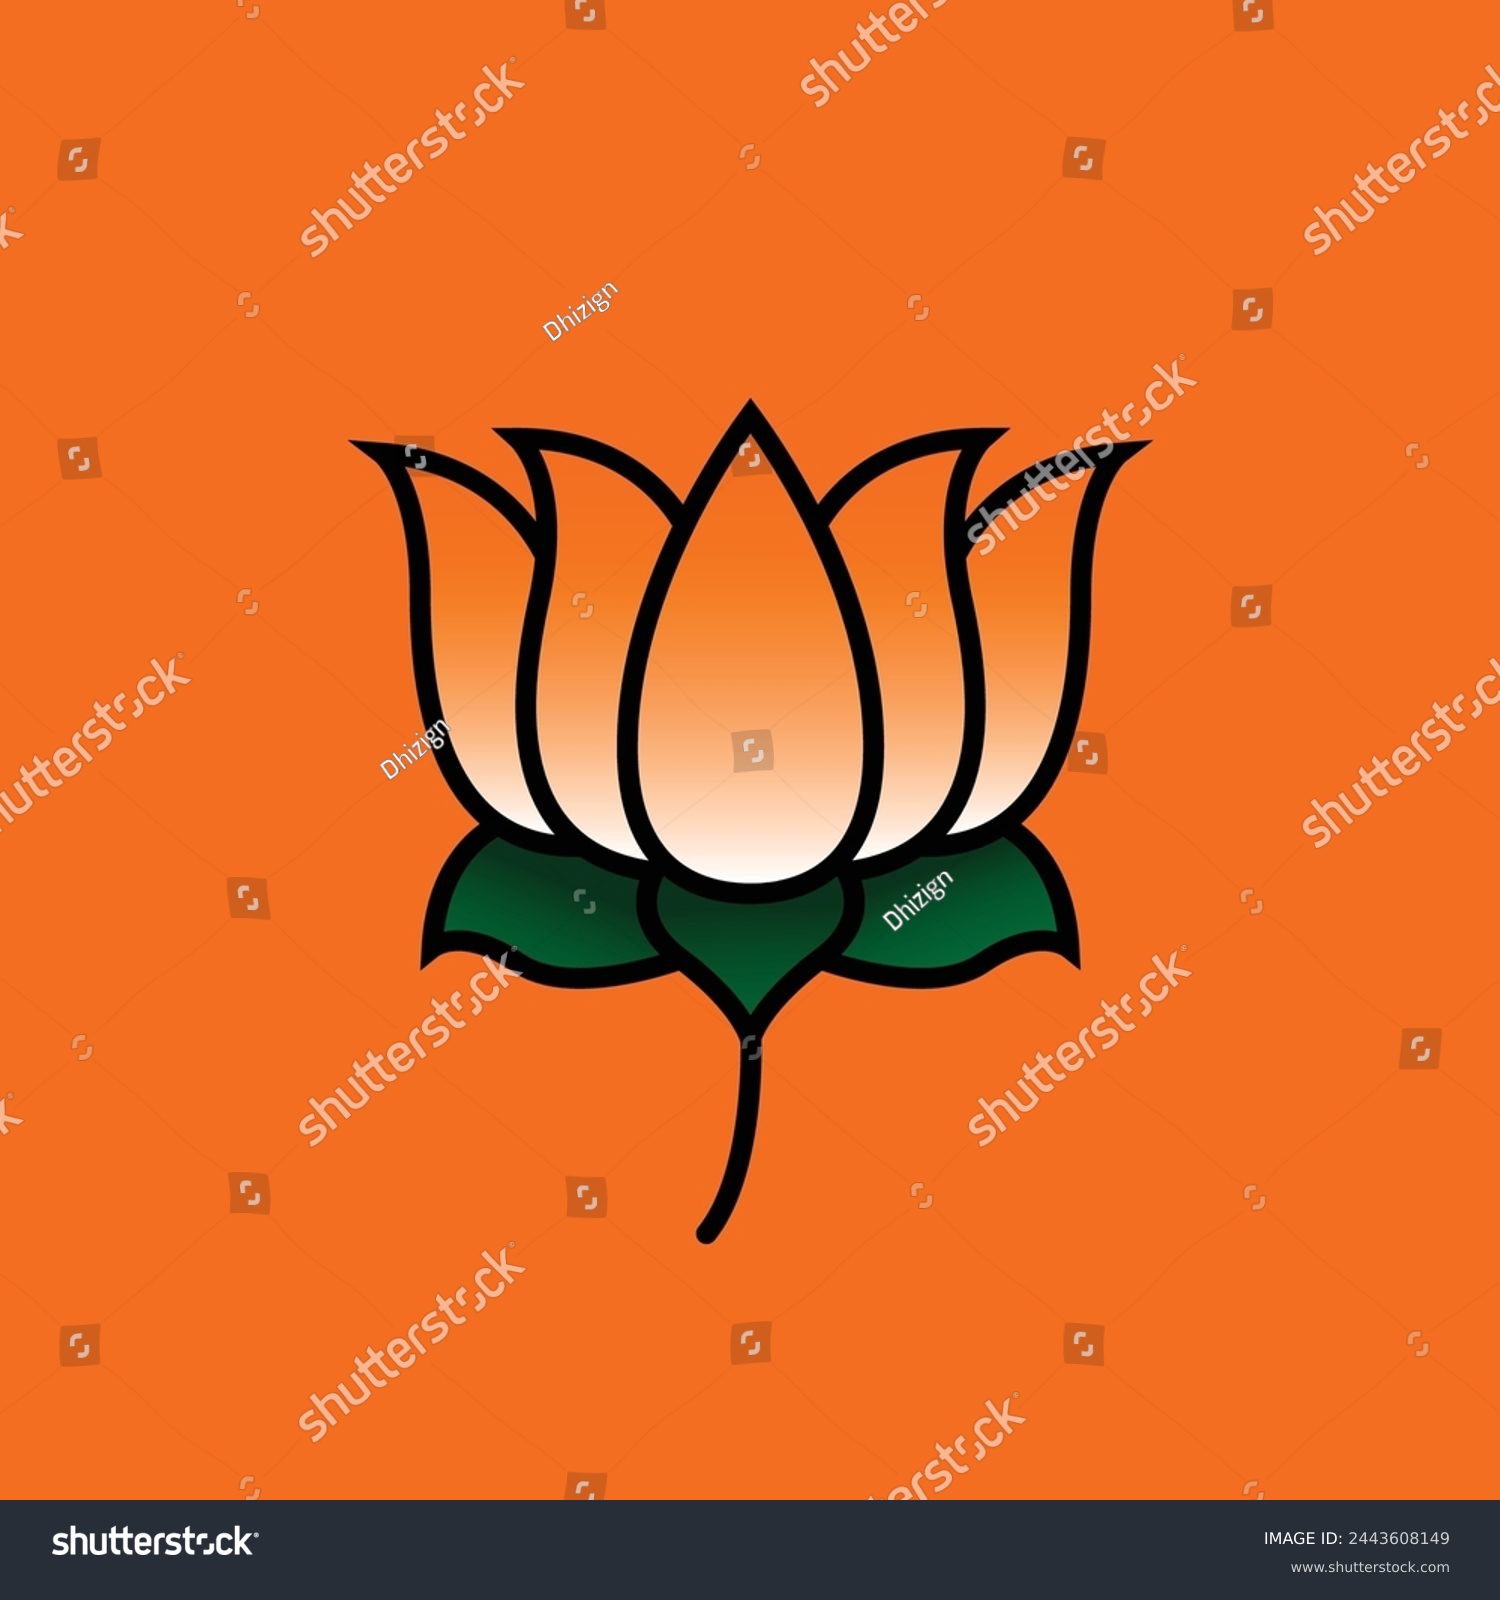 SVG of Lotus Flower Orange Green BJP Symbol, Bhartiya Janta party Indian political party election campaign icon logo safron vector illustration with orange background svg